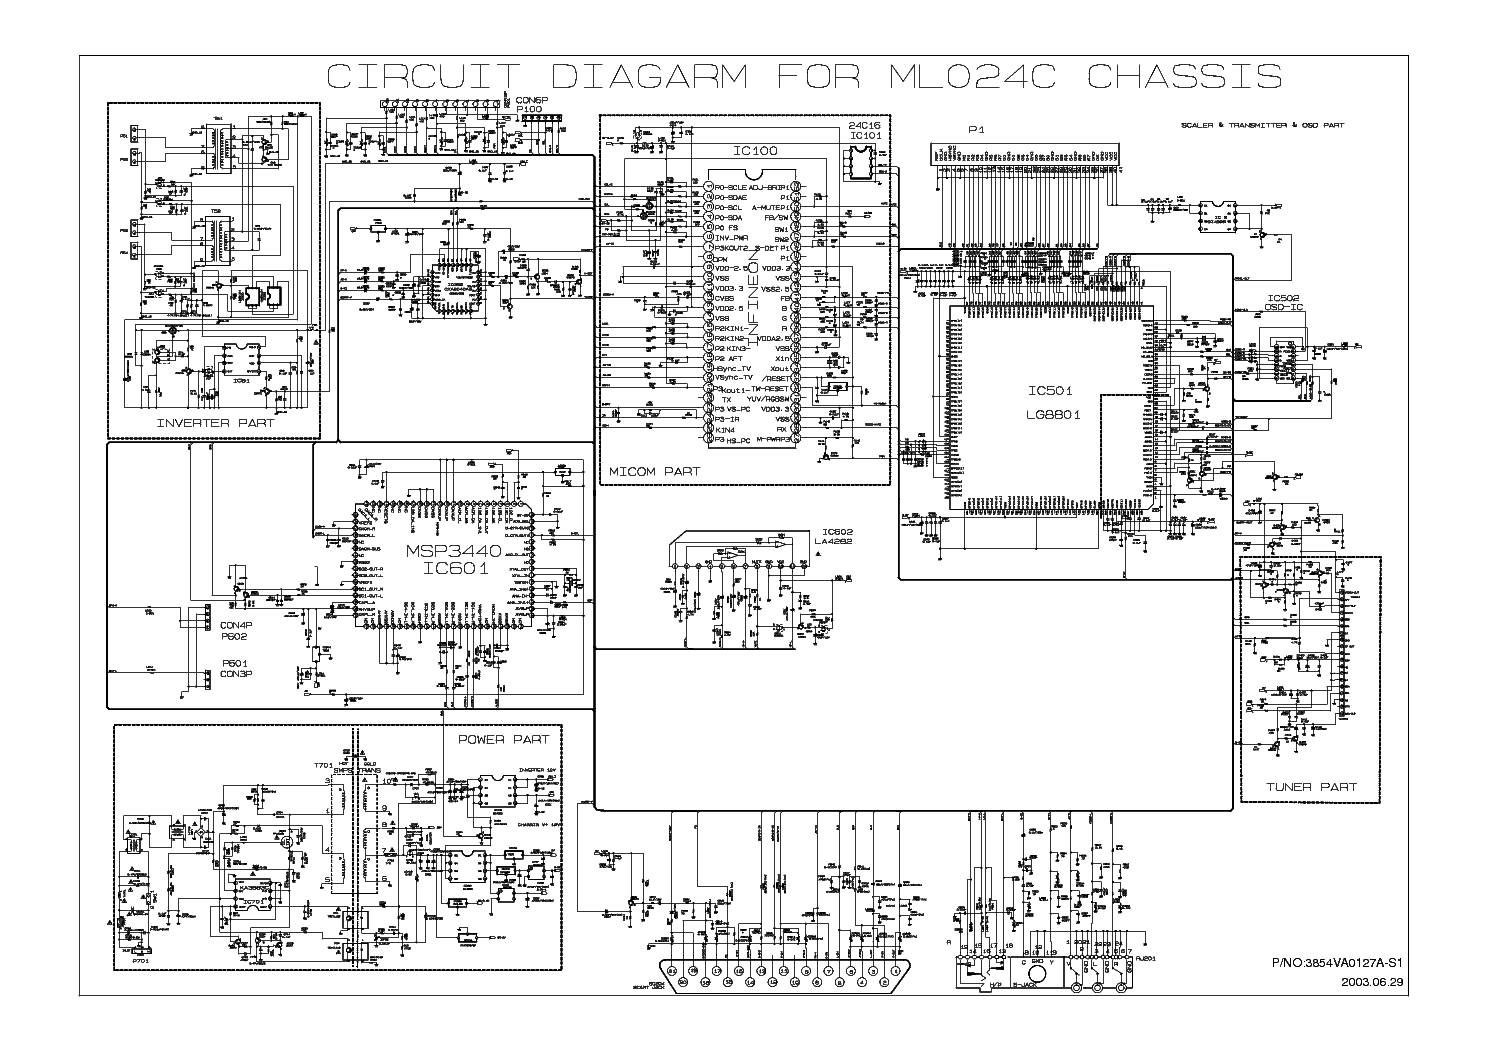 LG RZ-13LA60 CHASSIS MC-024C SM service manual (2nd page)